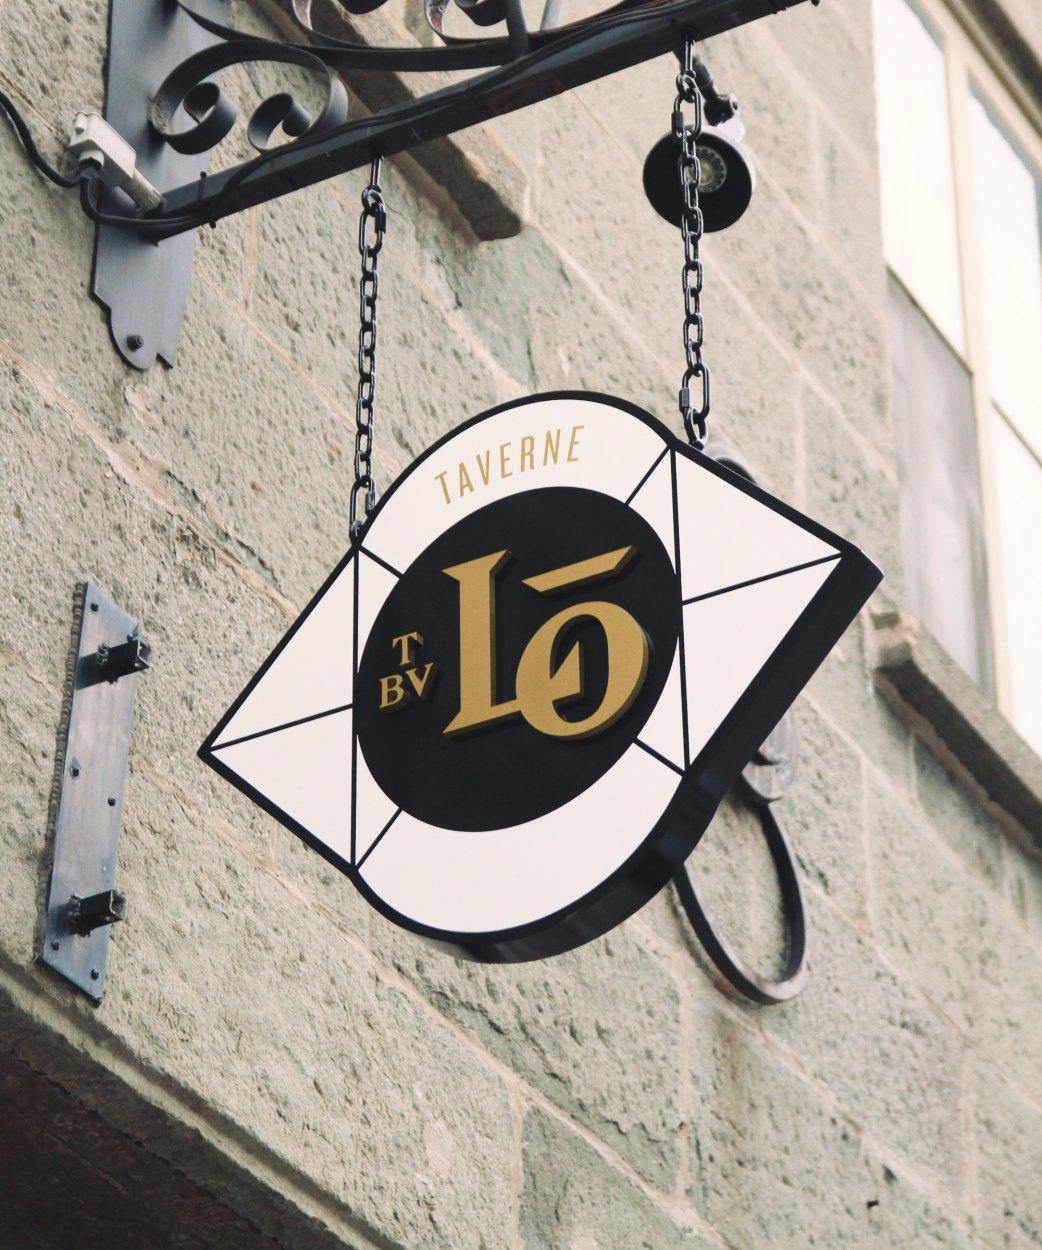 Louise Taverne & Bar à Vin - Old-Port, Quebec - Creative Cuisine Restaurant